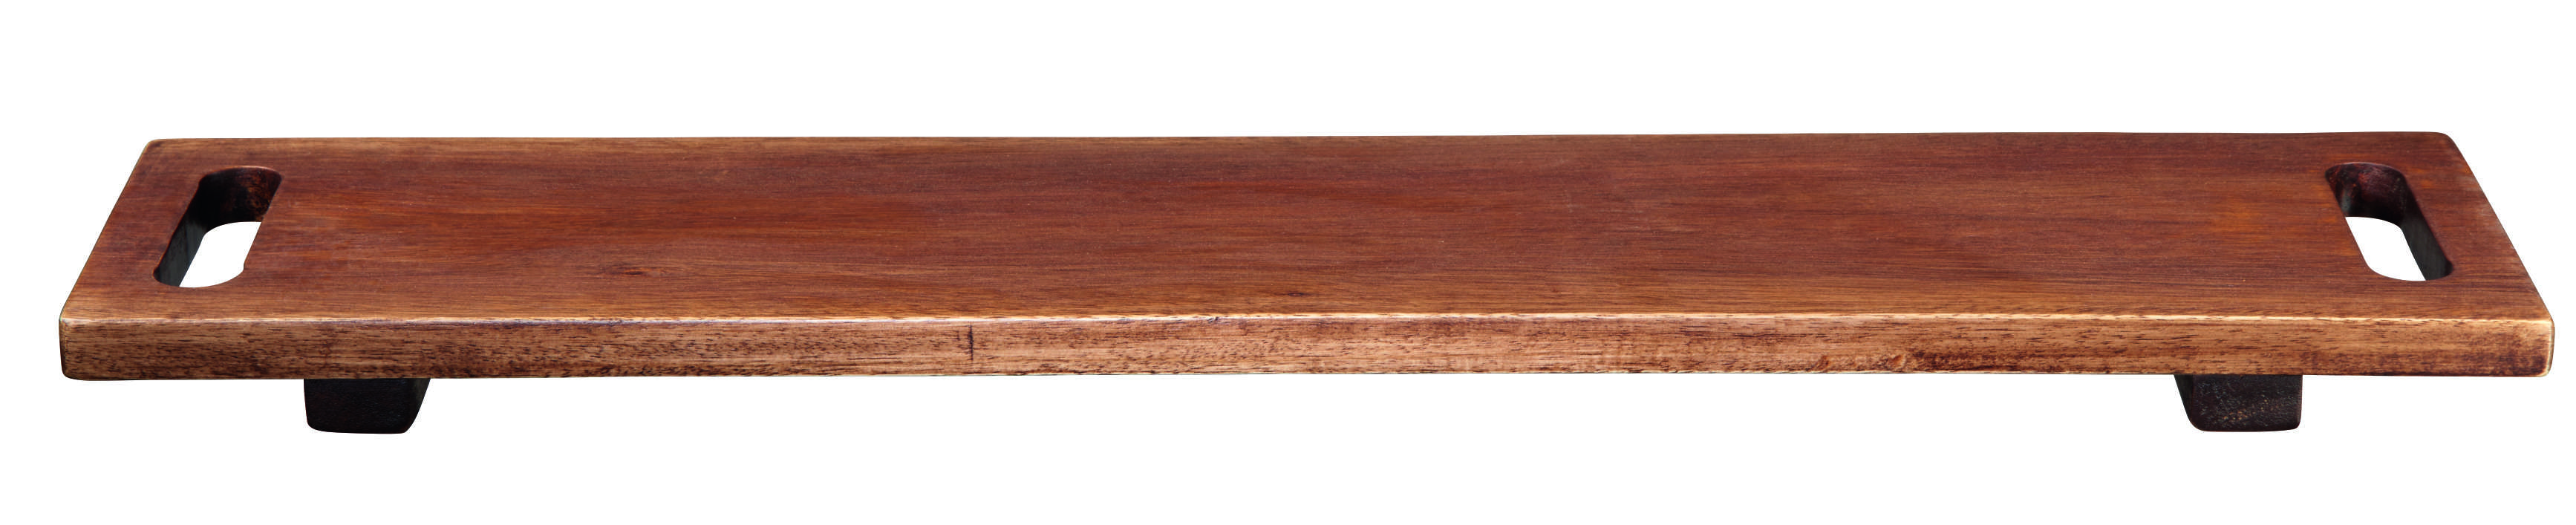 ASA - Holzboard auf Füßen WOOD, 60x13cm